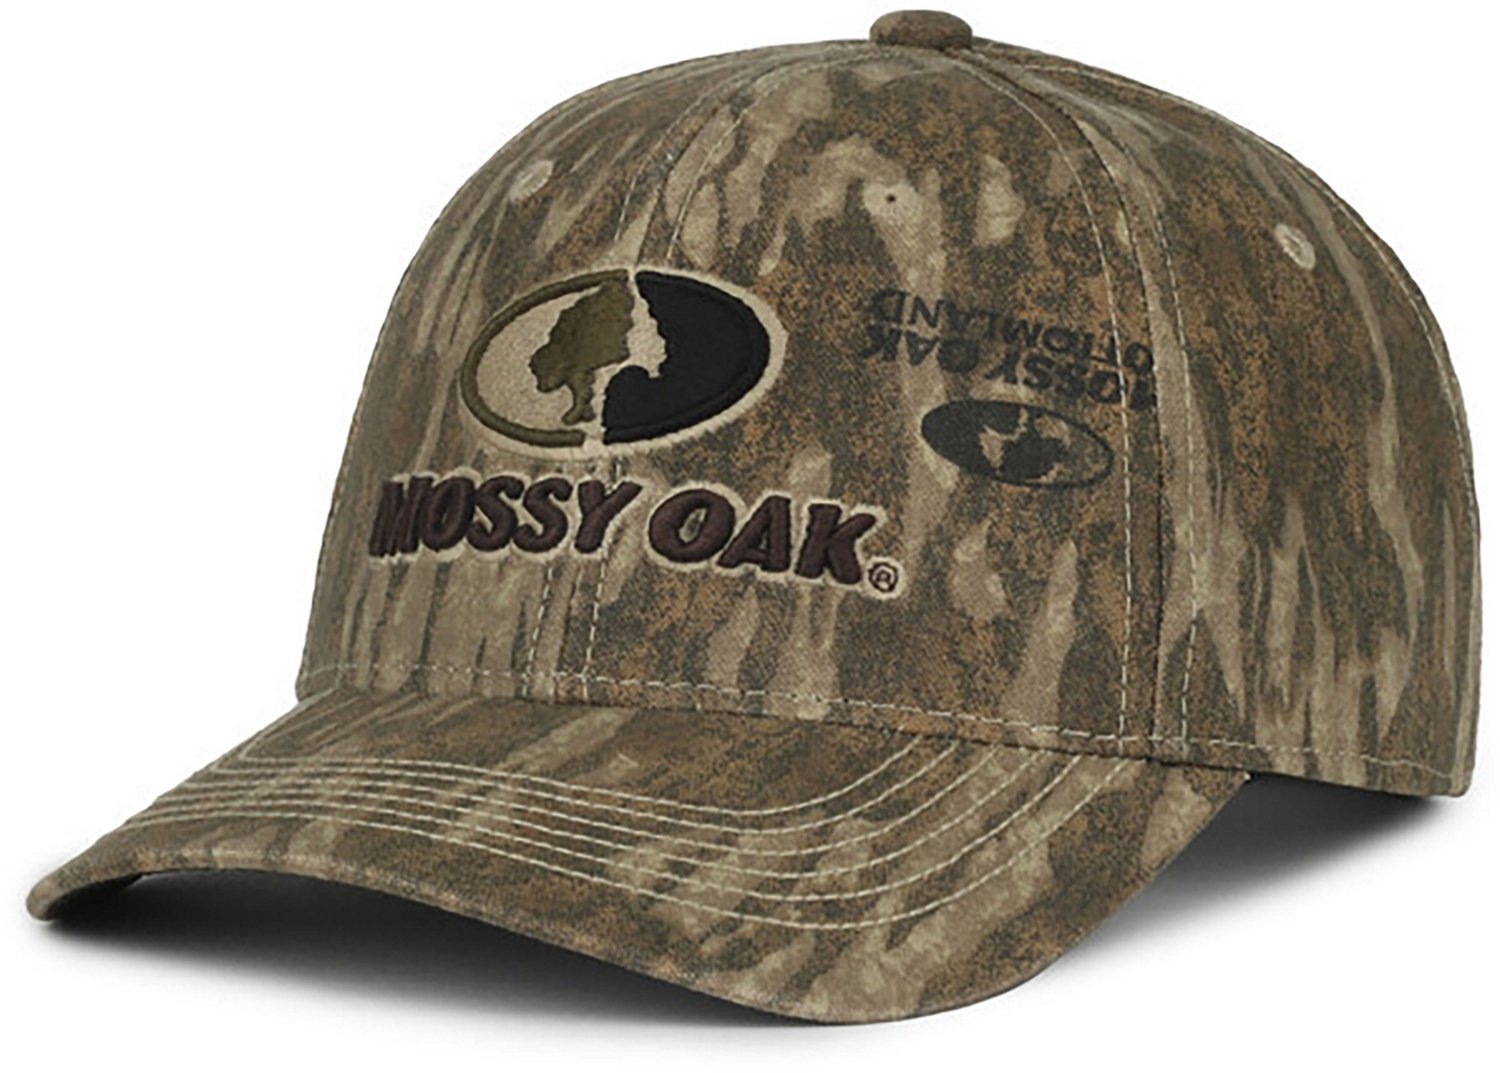 Hunting & Camo Hats & Caps